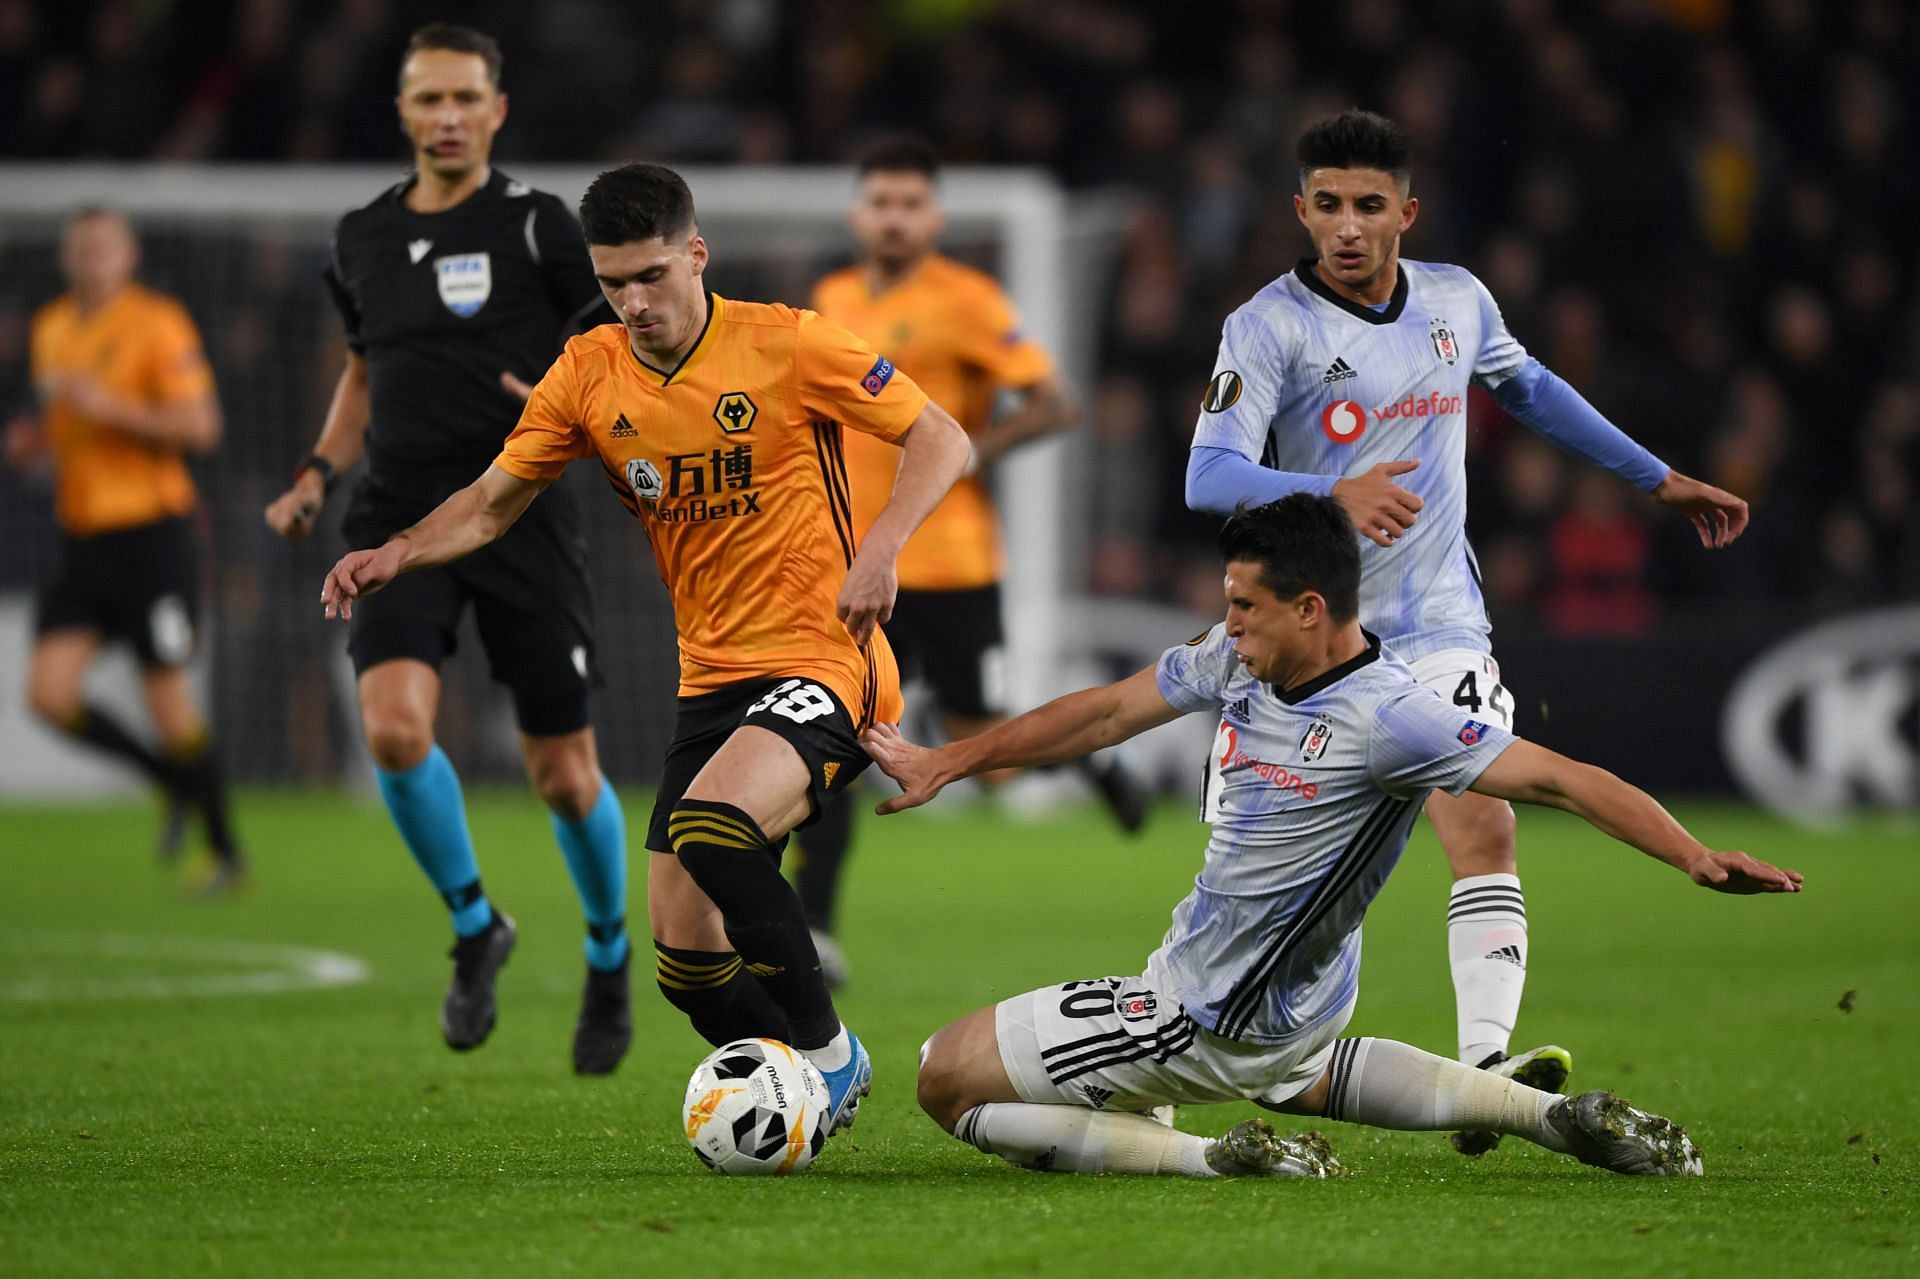 Wolves and Besiktas last met in Europa League action in 2019